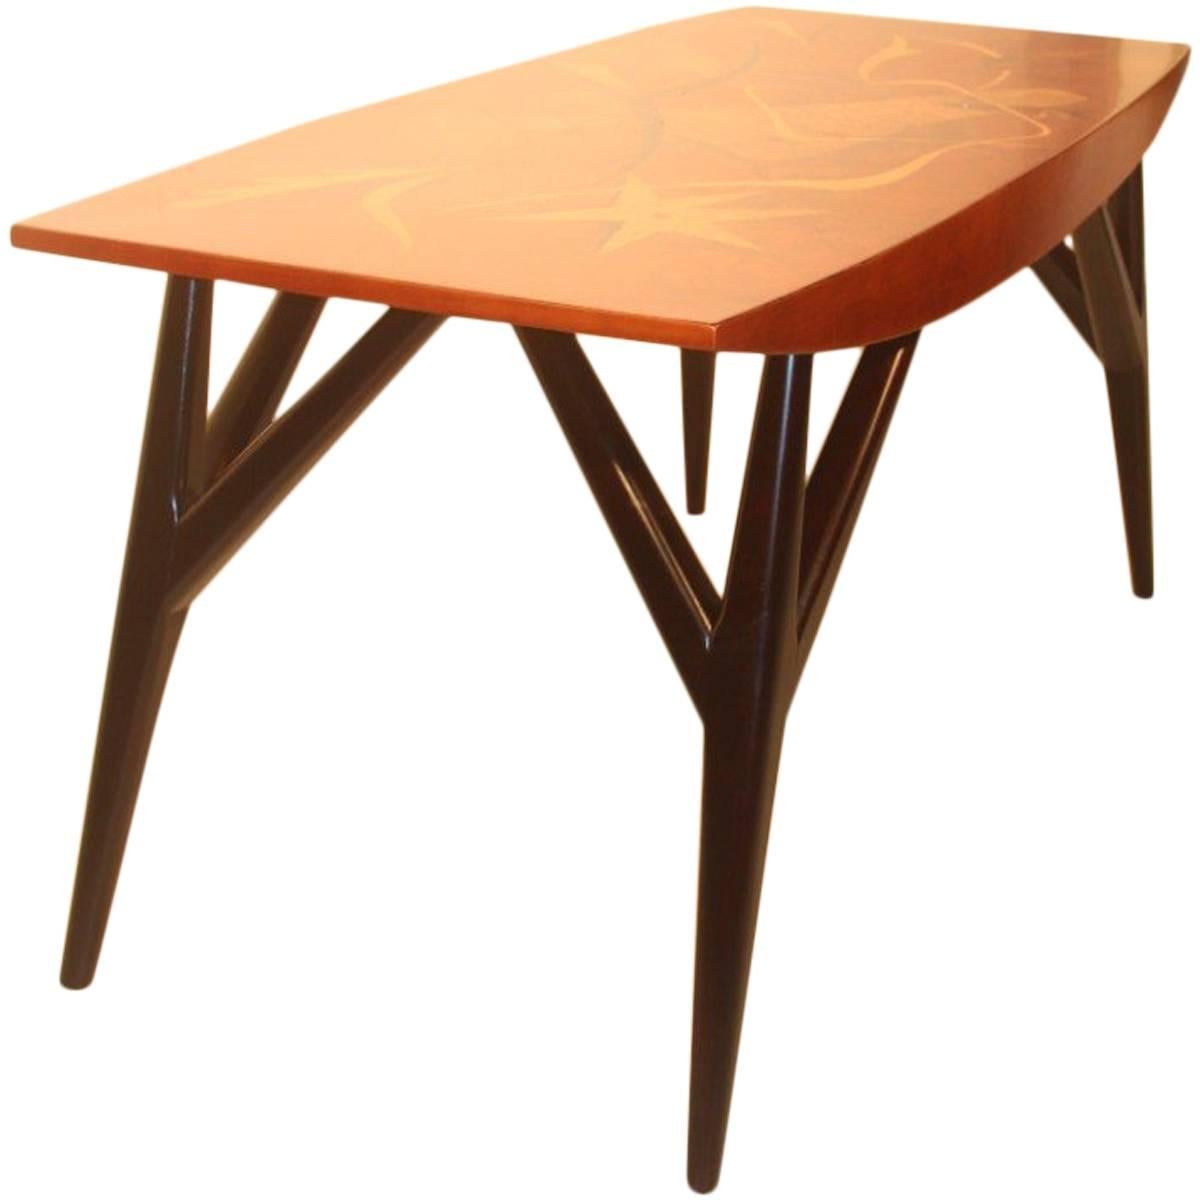 Coffee Table Luigi Scremin Minimalist Forms, 1940s Wood Precious Italian Design